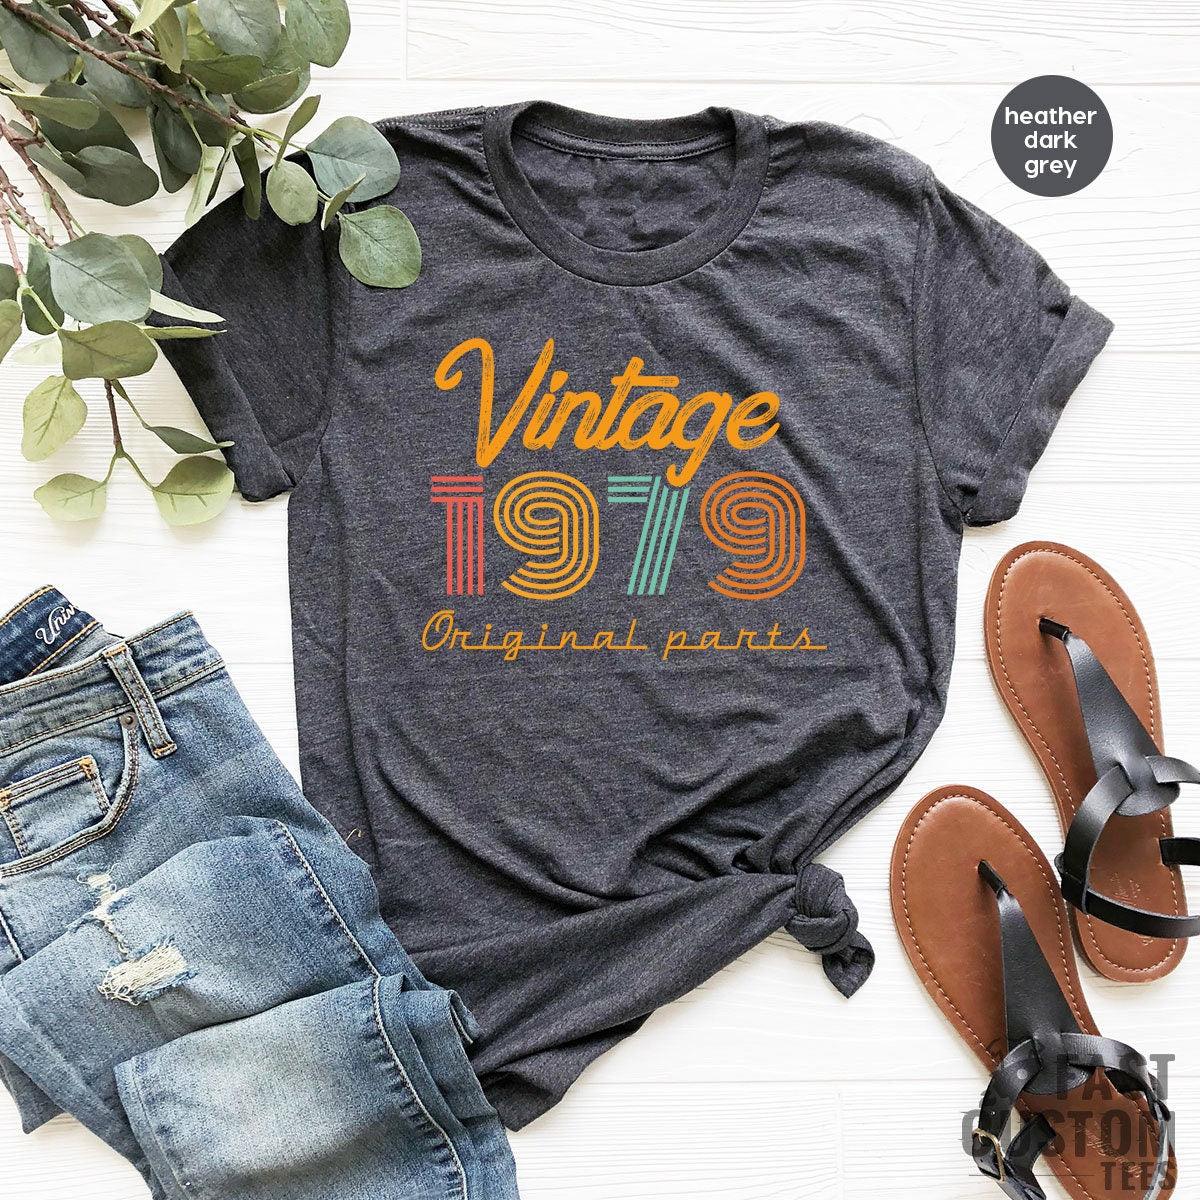 42nd Birthday Shirt, Vintage T Shirt, Vintage 1979 Shirt, 42nd Birthday Gift For Women, 42nd Birthday Shirt Men, Retro Shirt, Vintage Shirts - Fastdeliverytees.com